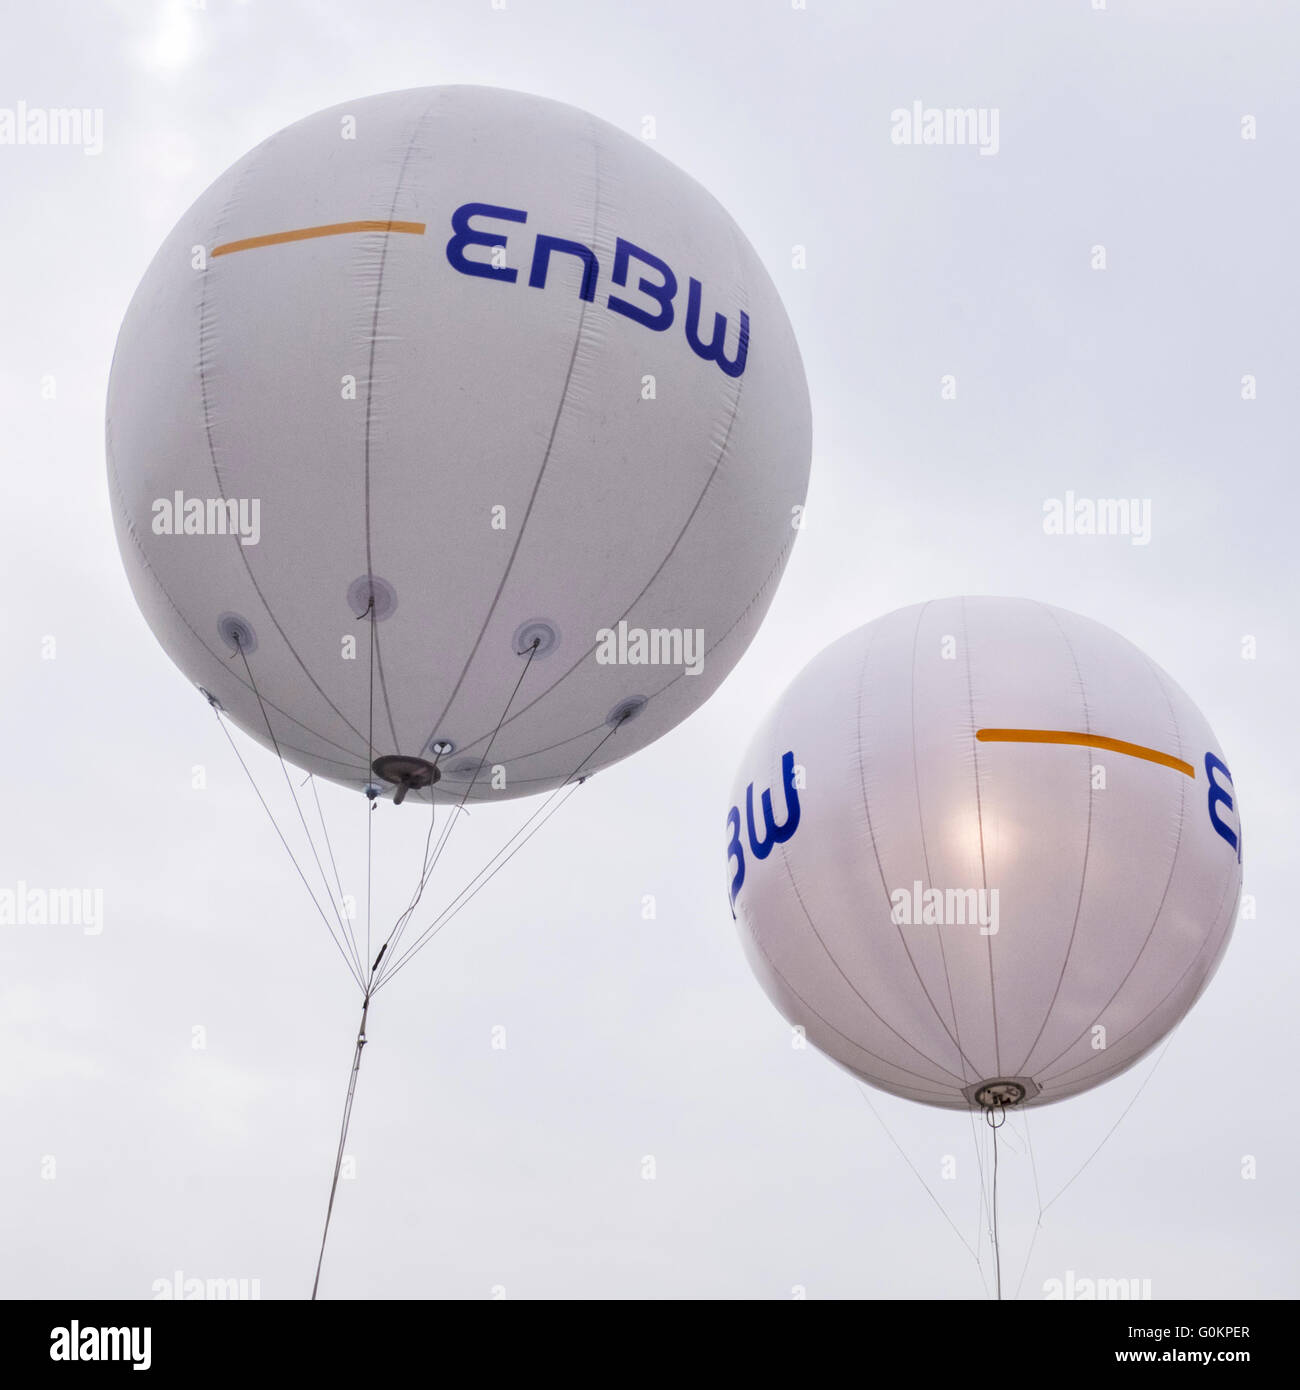 EnBW electricity company advertising balloons, Stuttgart, Germany Stock Photo